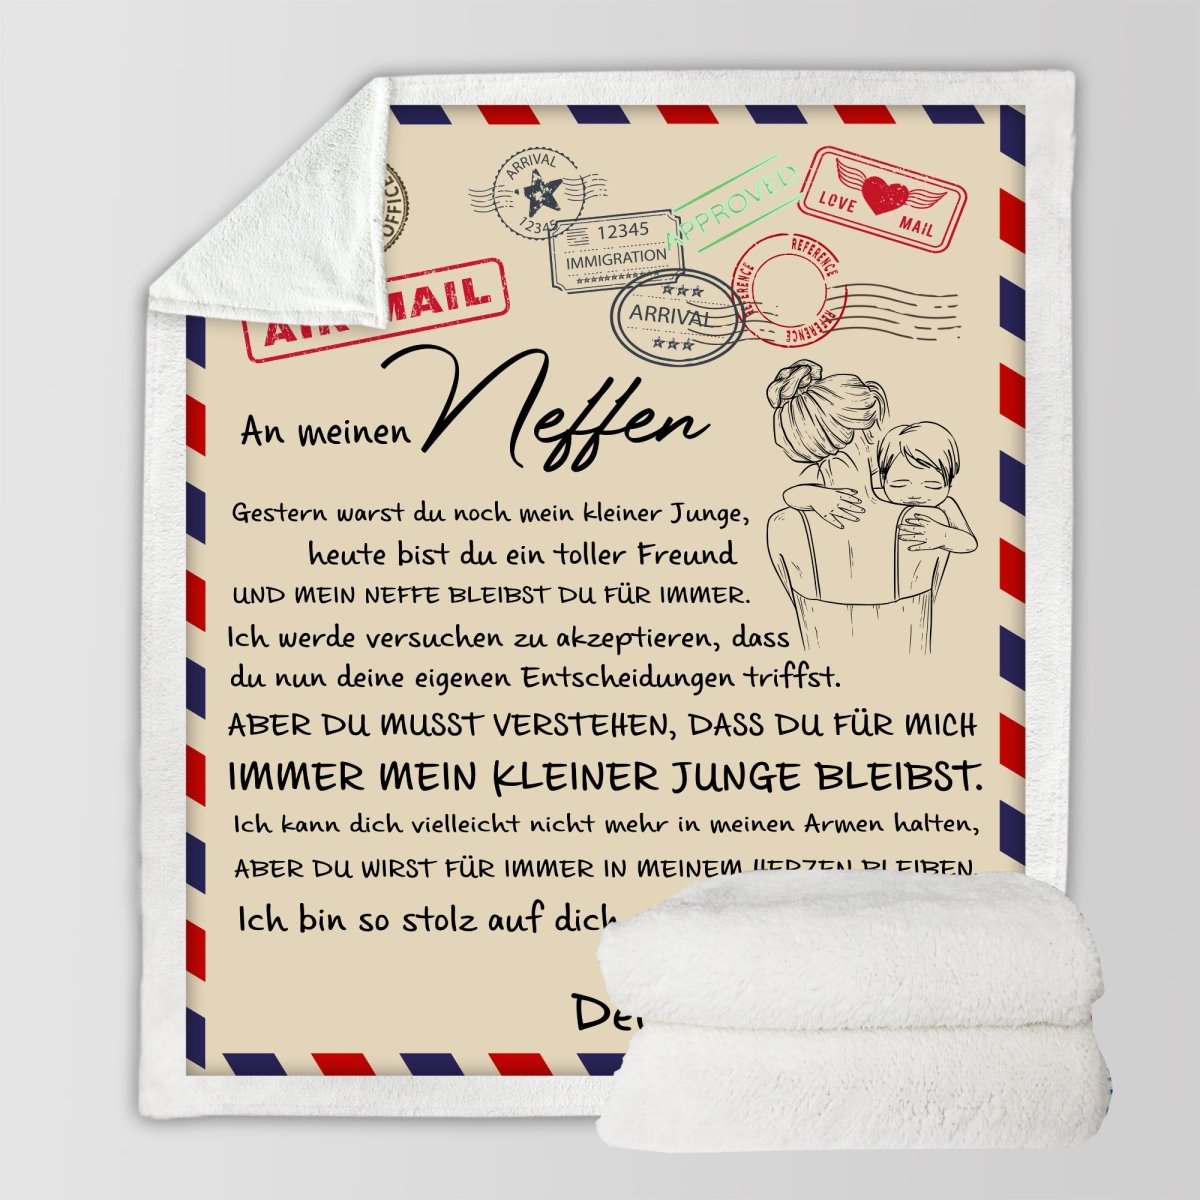 "An meine Neffen" Decke - Postkarte - Gift of Giving DE